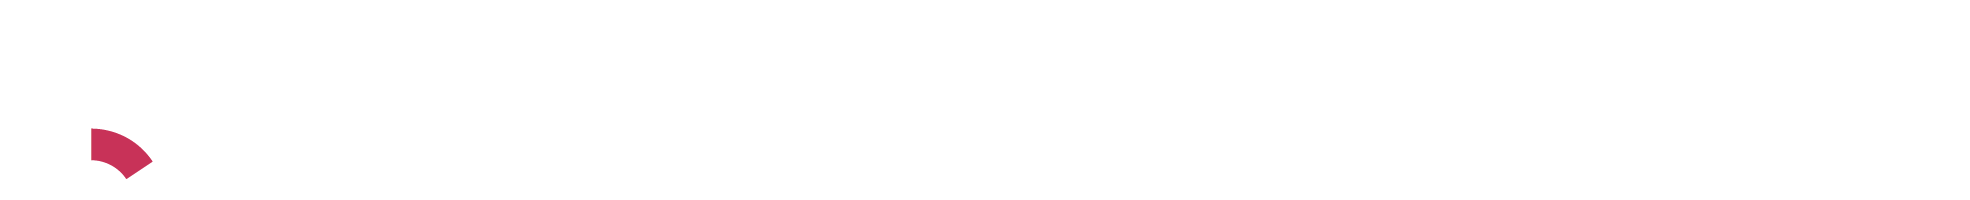 Qompas MasterKeuze logo wit